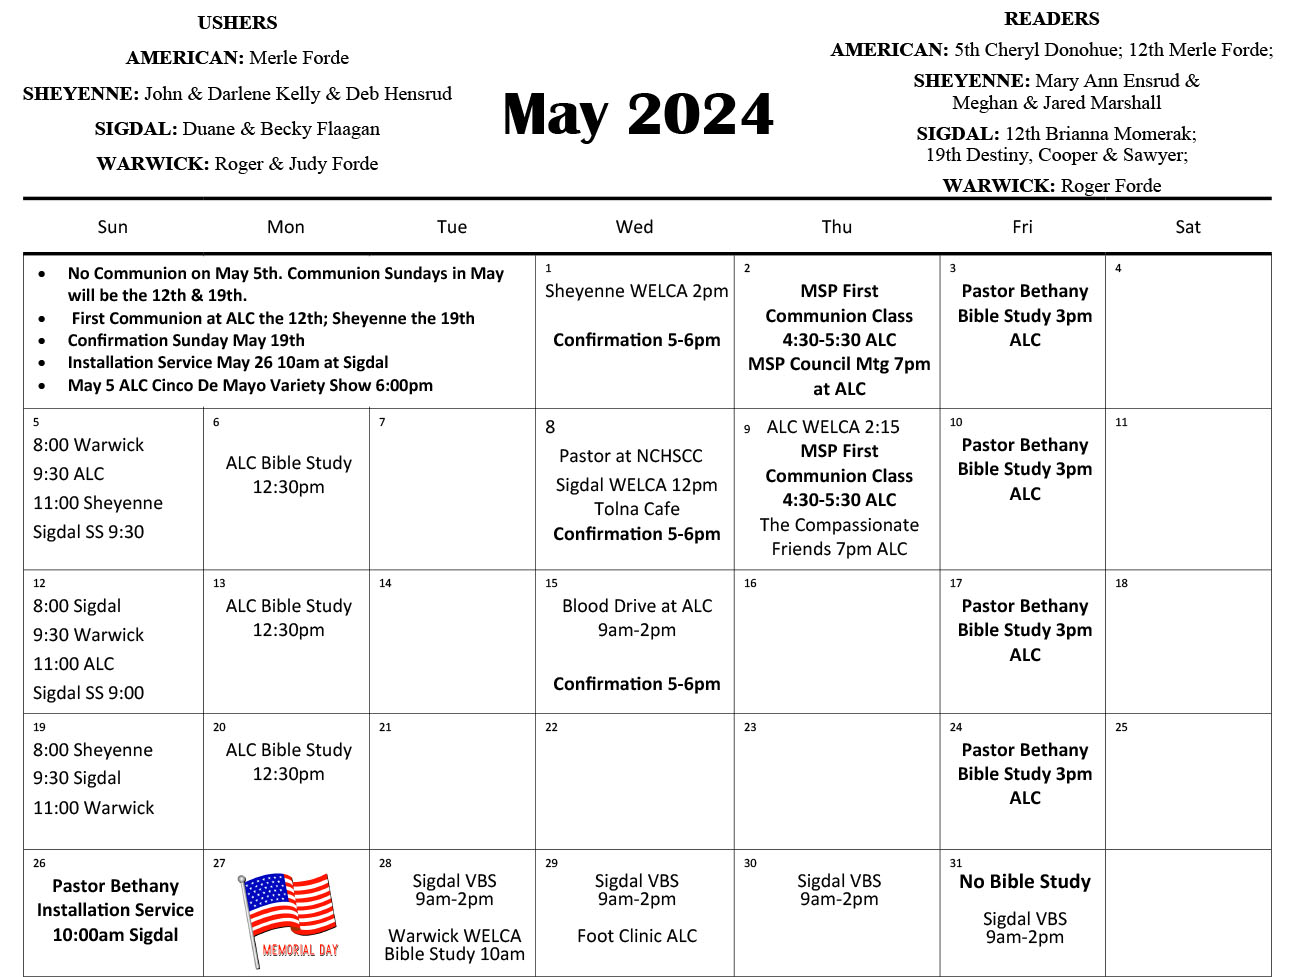 Church Calendar of Events for February 2019